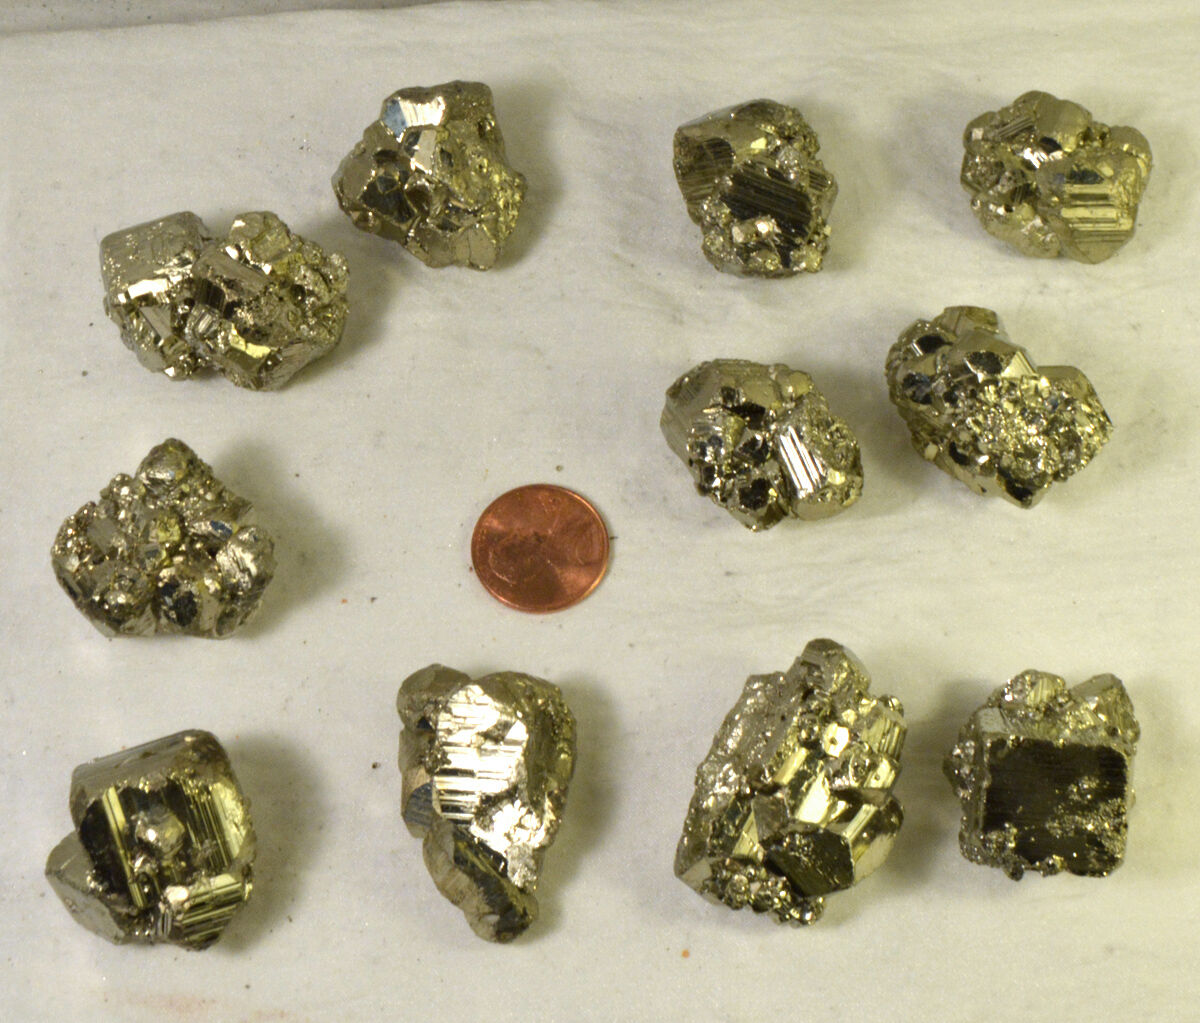 #2514 Pyrite - Peru [ONE PIECE] - Brilliant - Shiney pieces